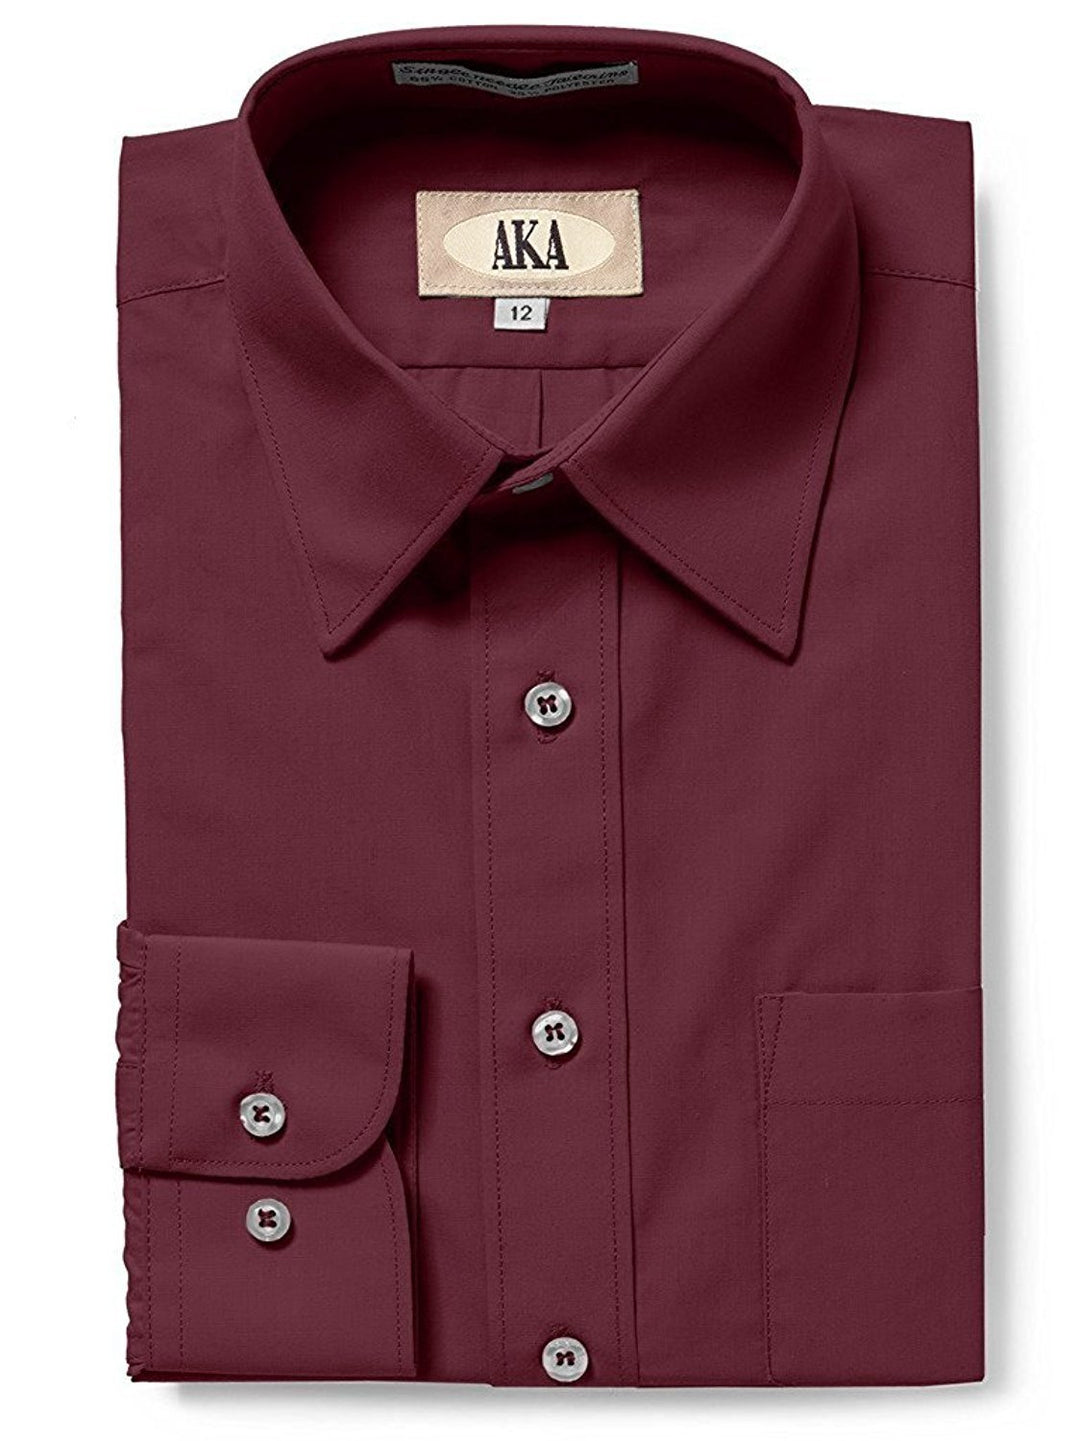 AKA Boy's 2-20 Regualr Fit Long Sleeve Solid Dress Shirt - Colors - CLEARANCE, FINAL SALE!